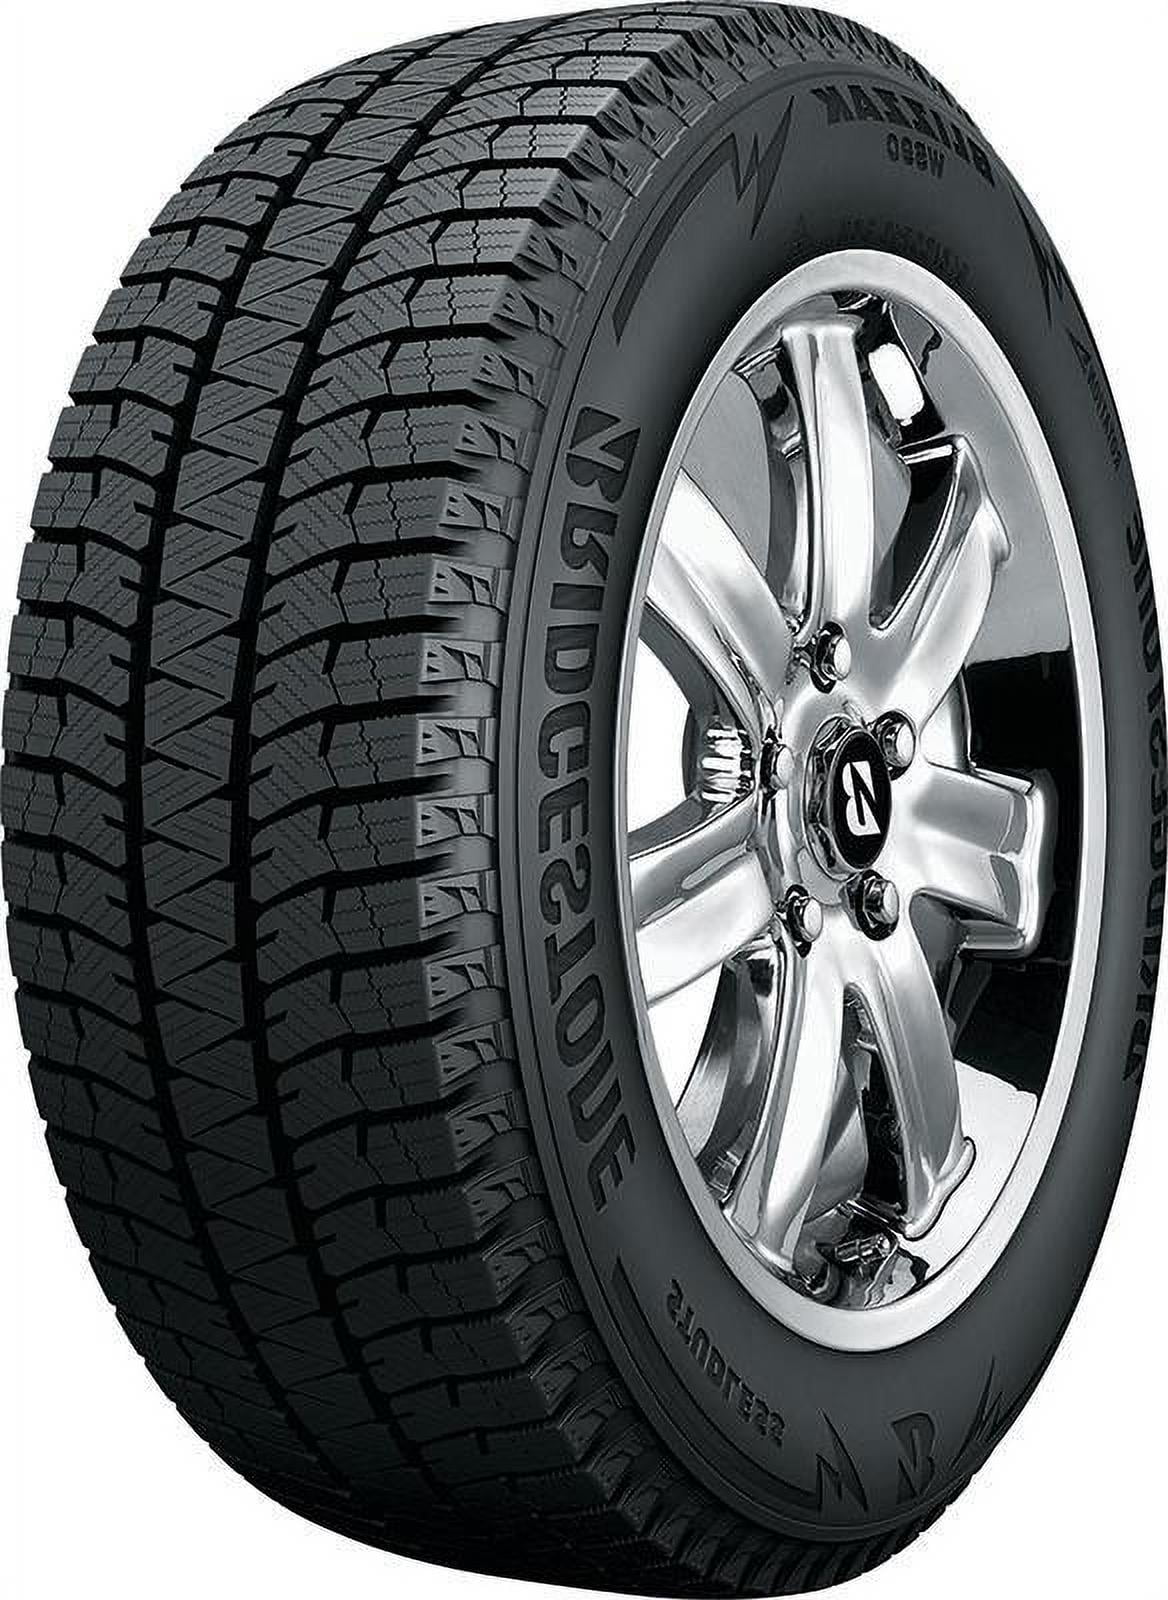 Bridgestone Blizzak WS90 Winter 215/55R16 97H XL Passenger Tire